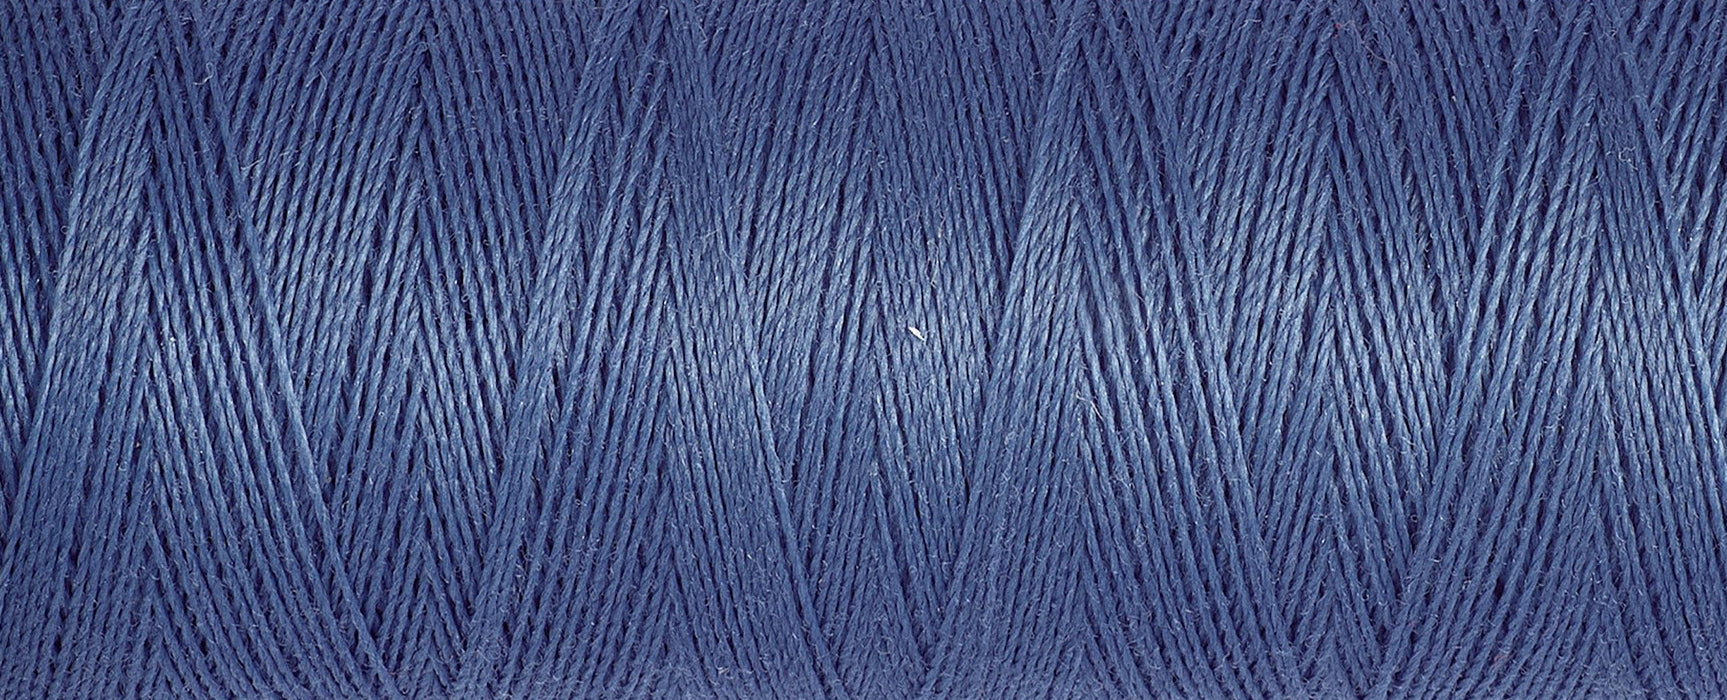 112 Shark Blue - Gütermann Sew All rPET Thread 100m